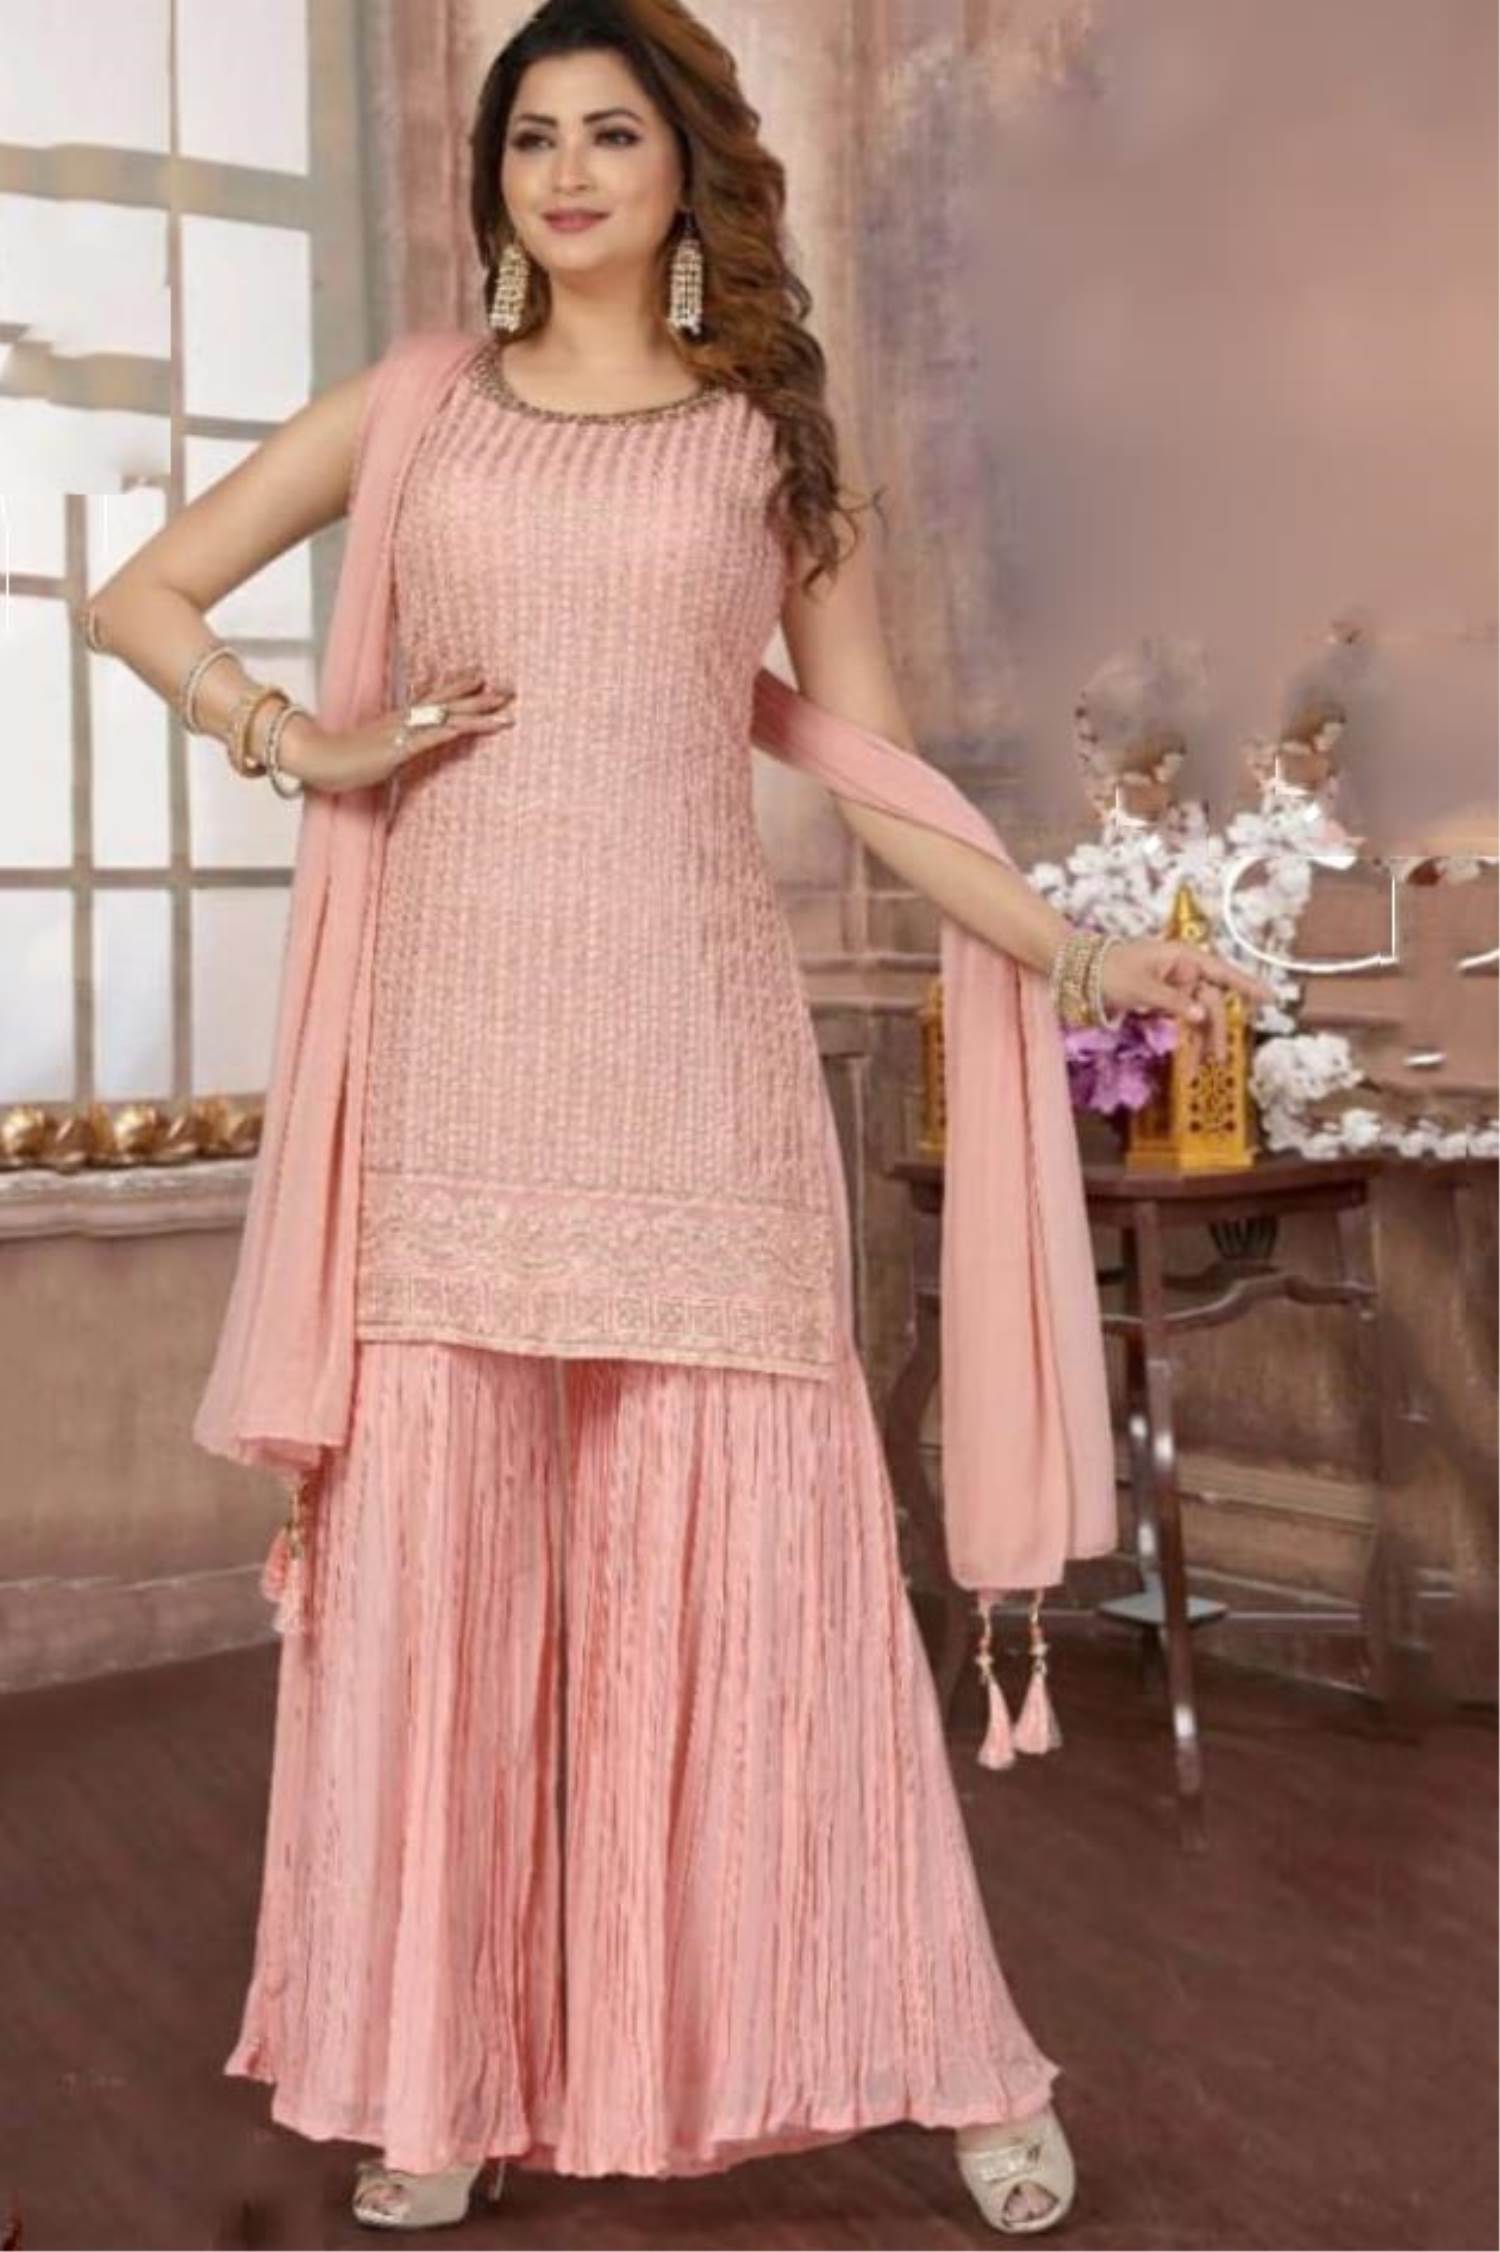 Buy Afghani plazo dress in rajasthani pattern mandala design fashion at  Amazon.in